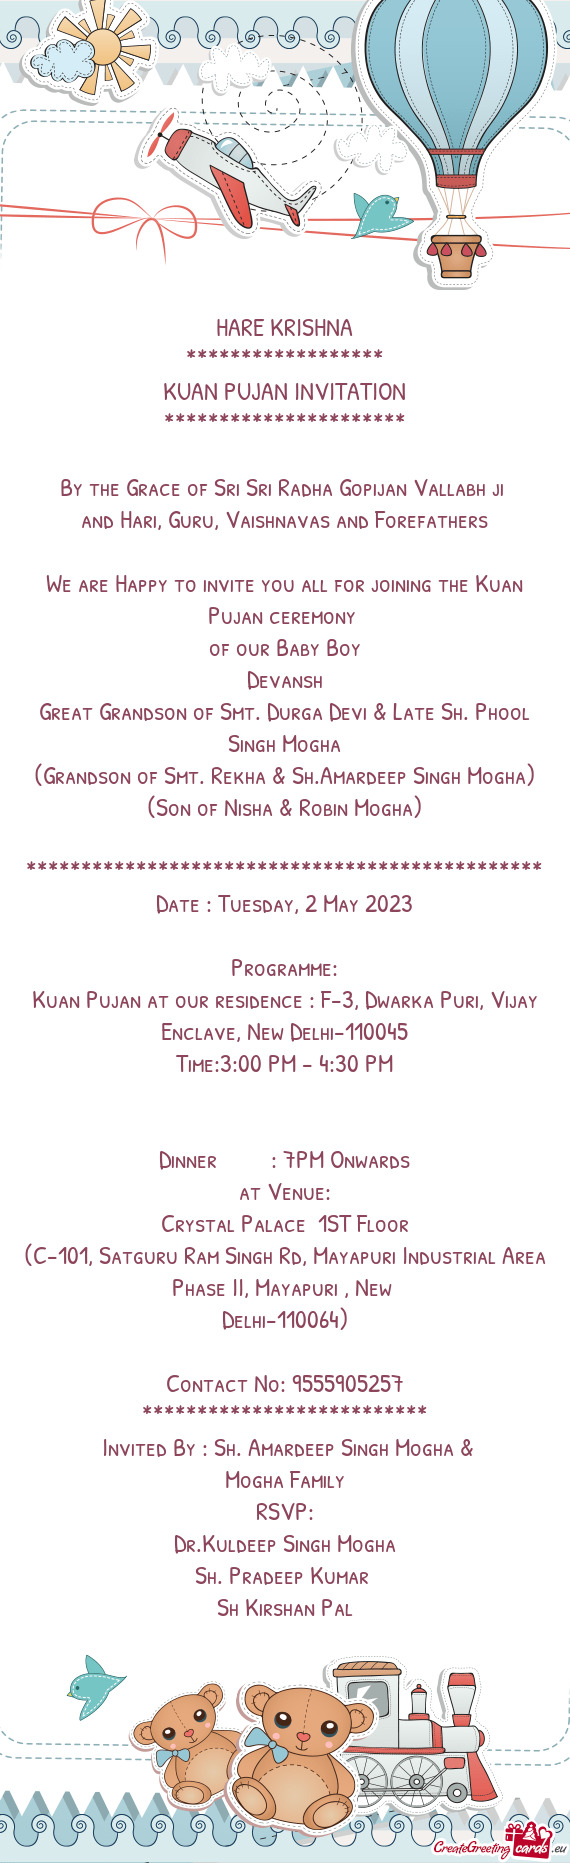 Kuan Pujan at our residence : F-3, Dwarka Puri, Vijay Enclave, New Delhi-110045